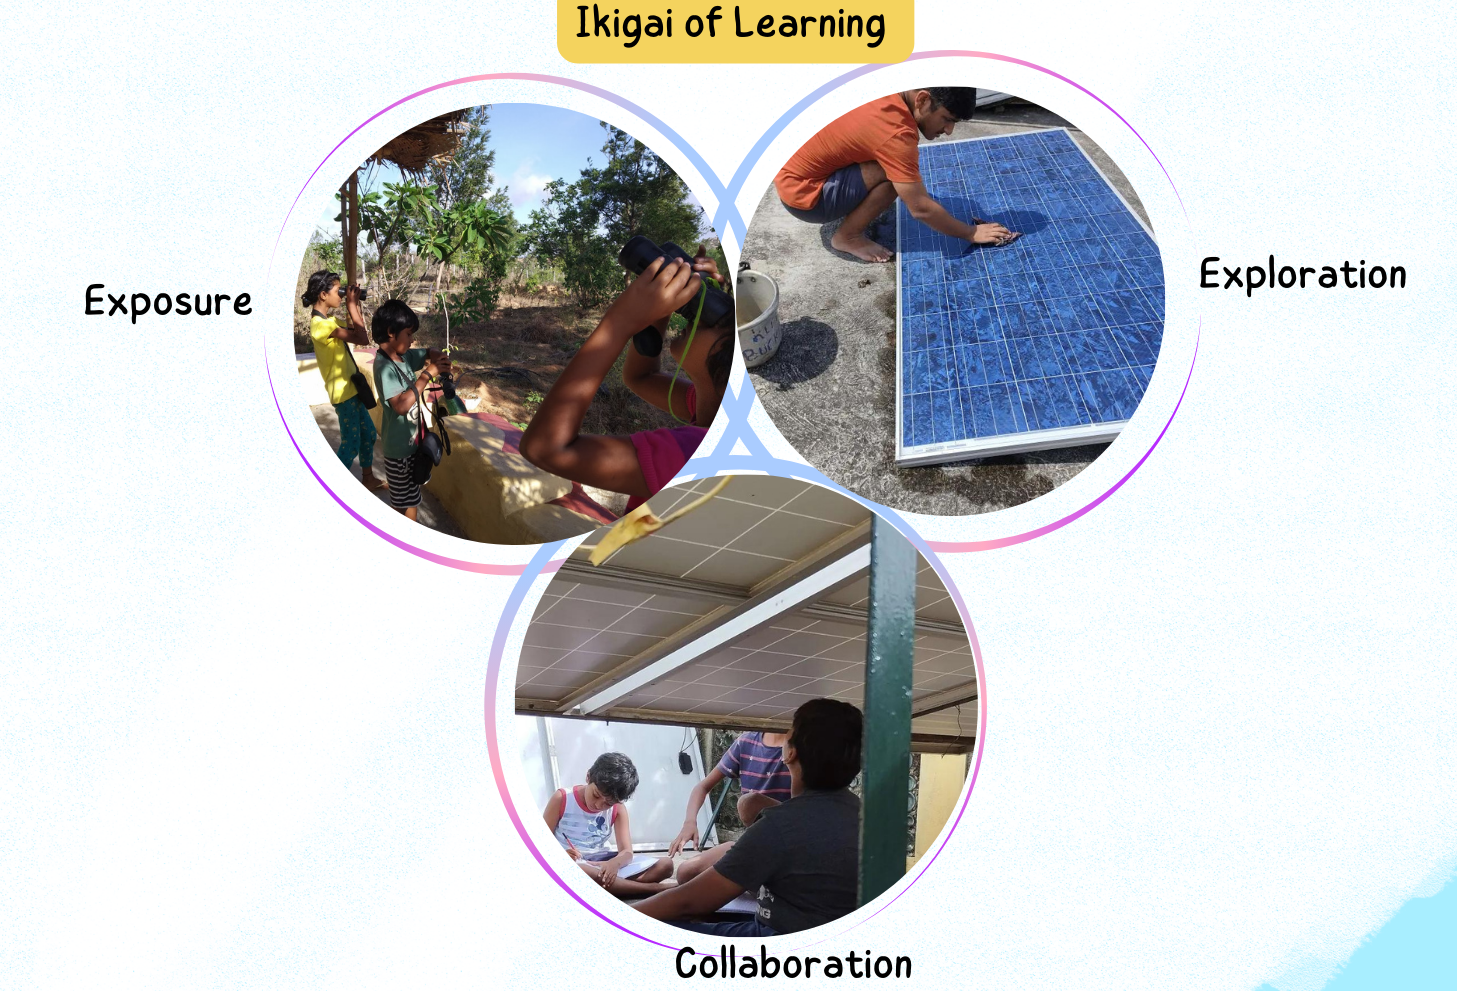 Exposure-Exploration-Collaboration – Ikigai of Learning